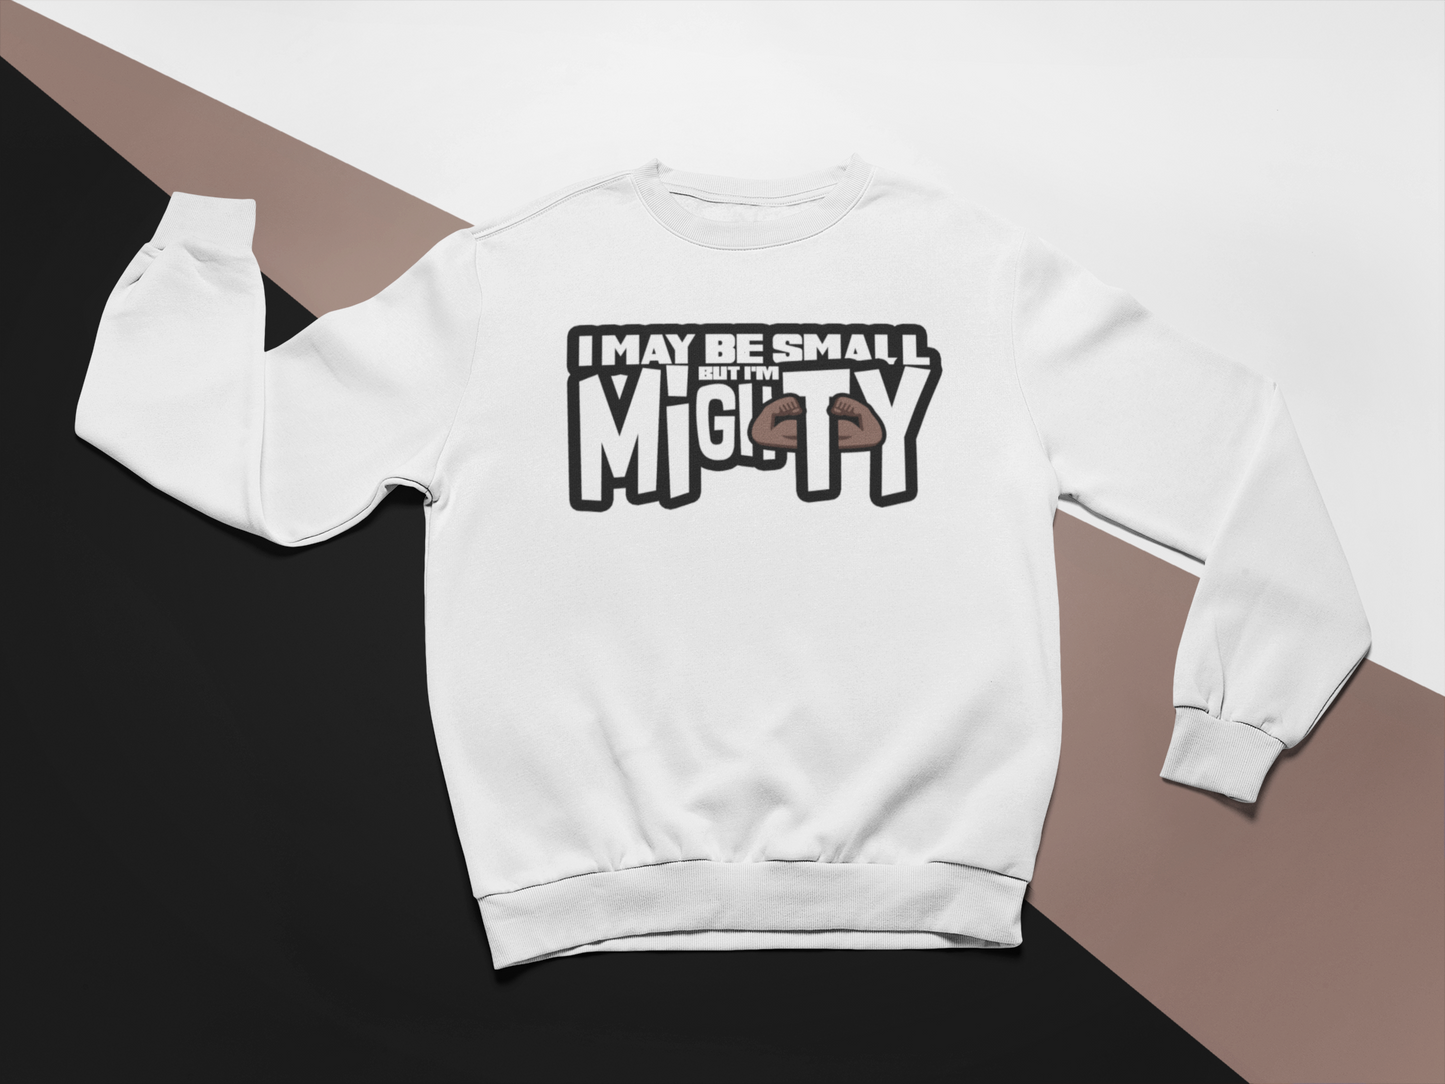 "Small But Mighty" Sweatshirt